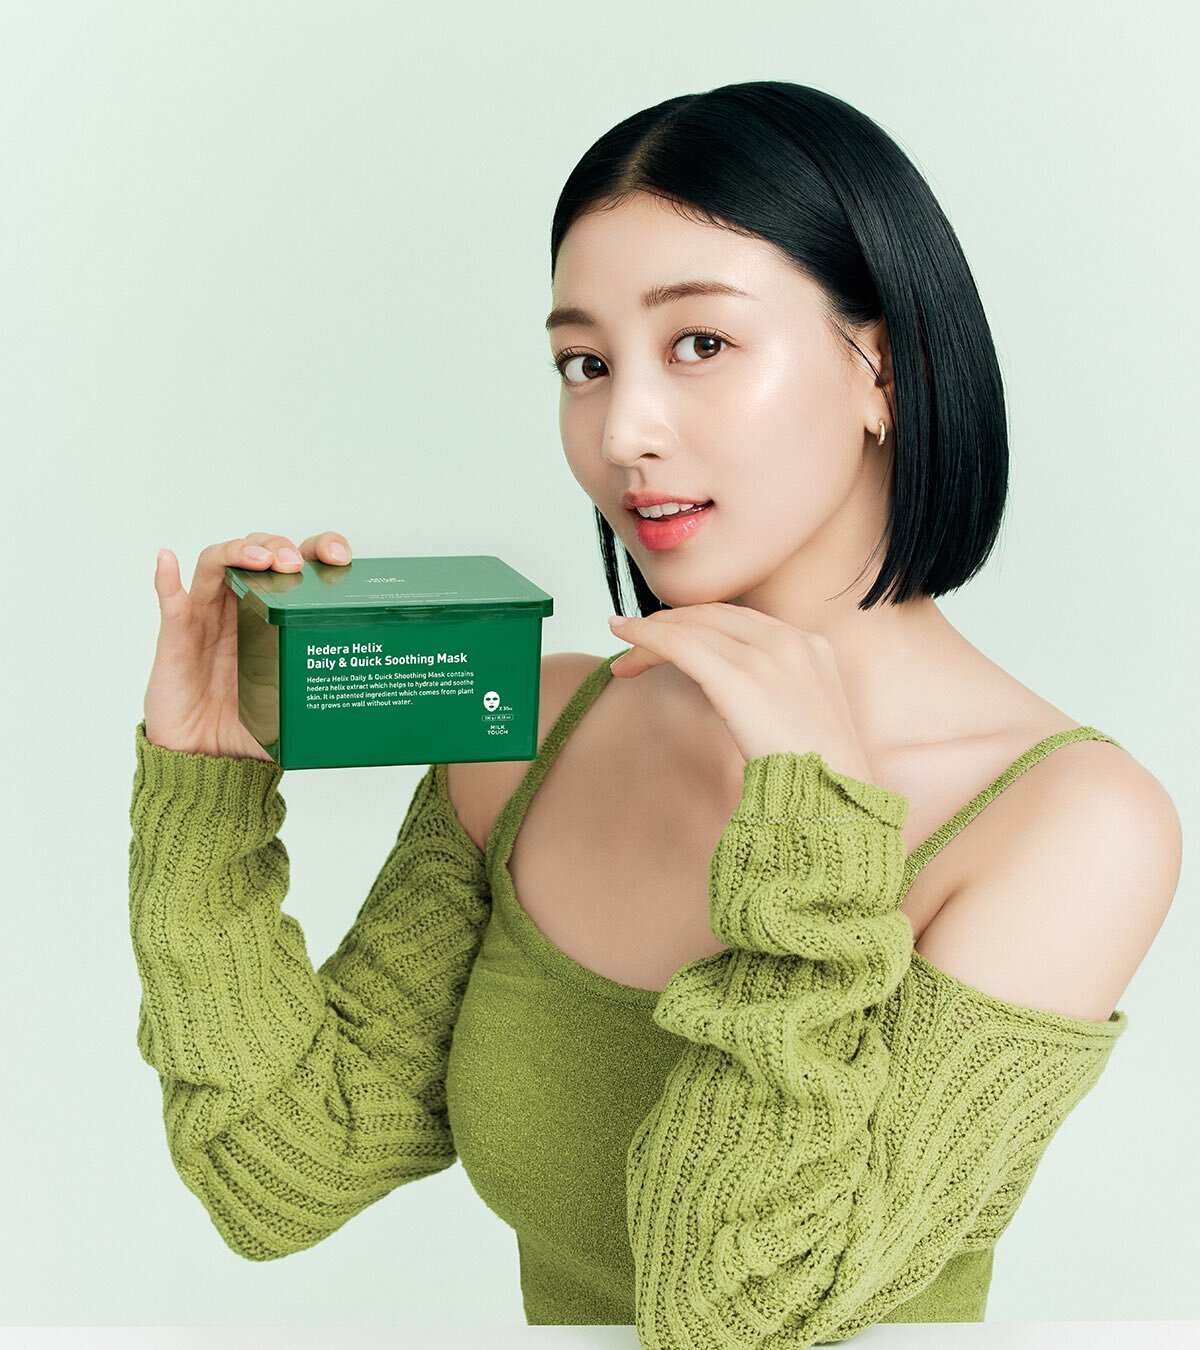 Beauty brand Milk Touch teases new ambassador TWICE's Jihyo